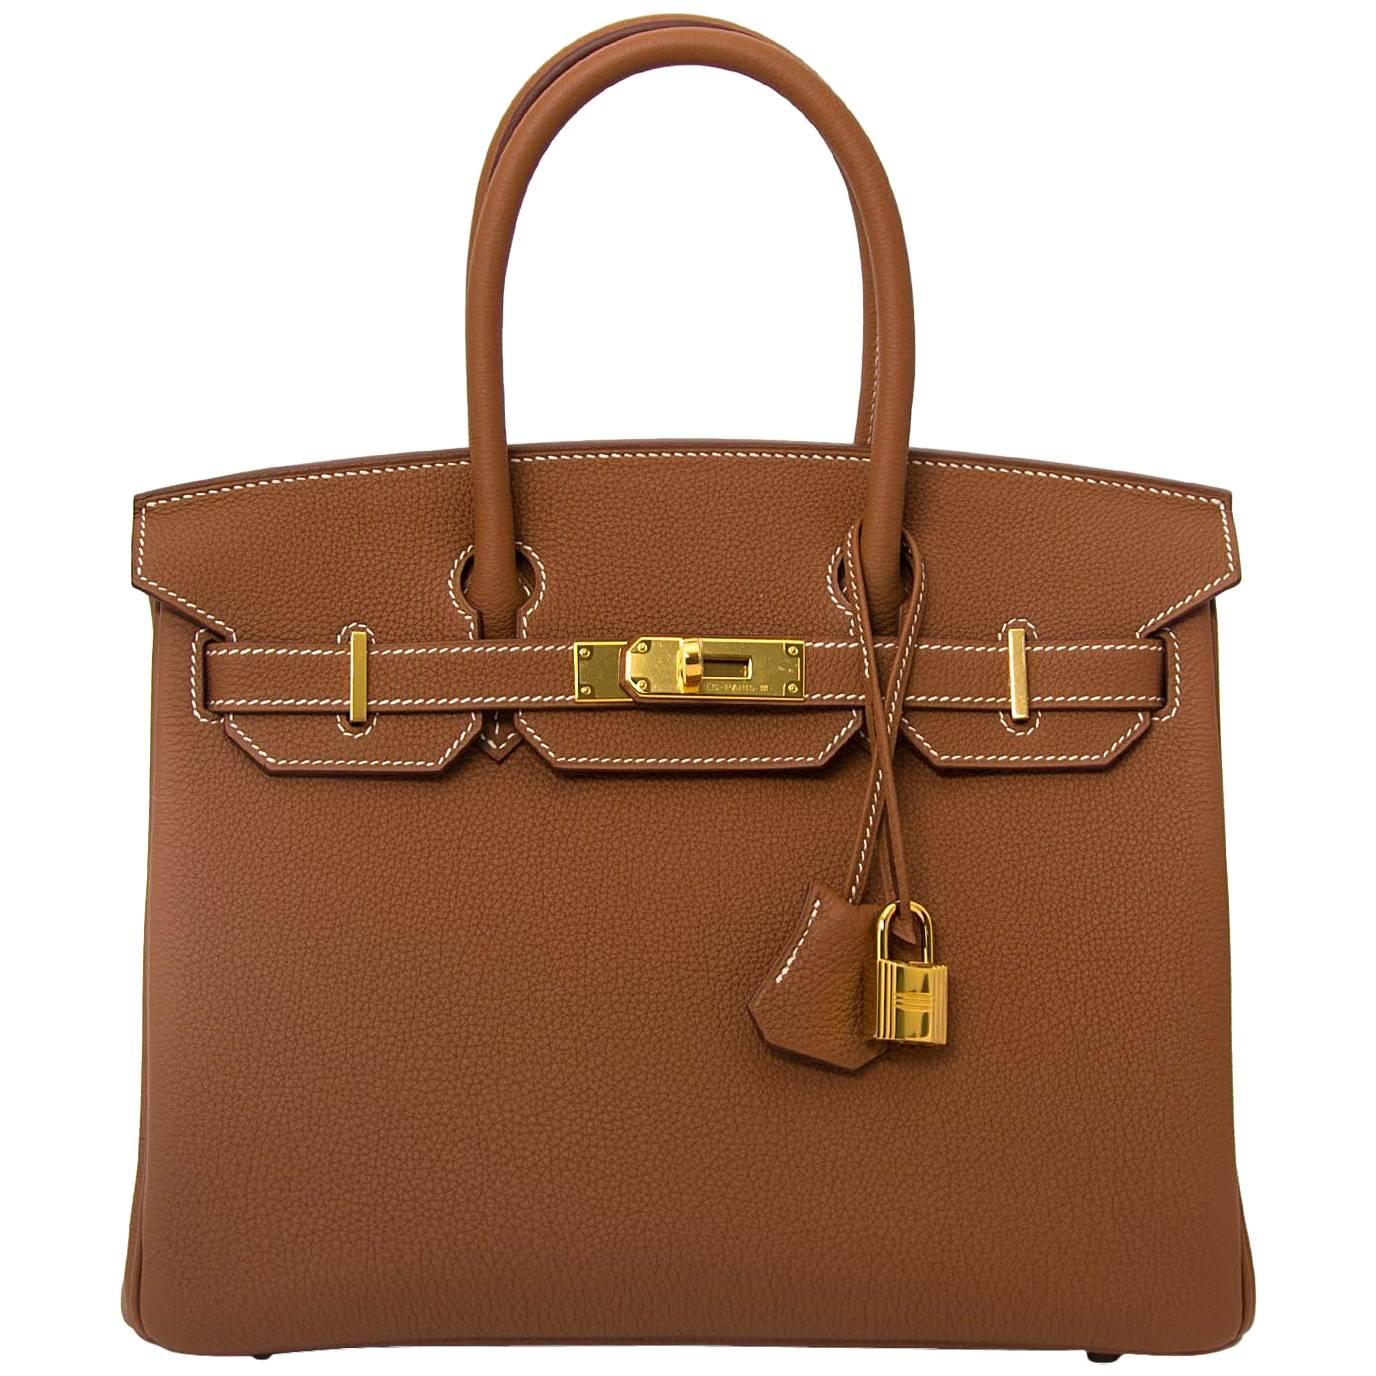 Hermès 30 Togo Gold Gold Hardware Birkin Bag